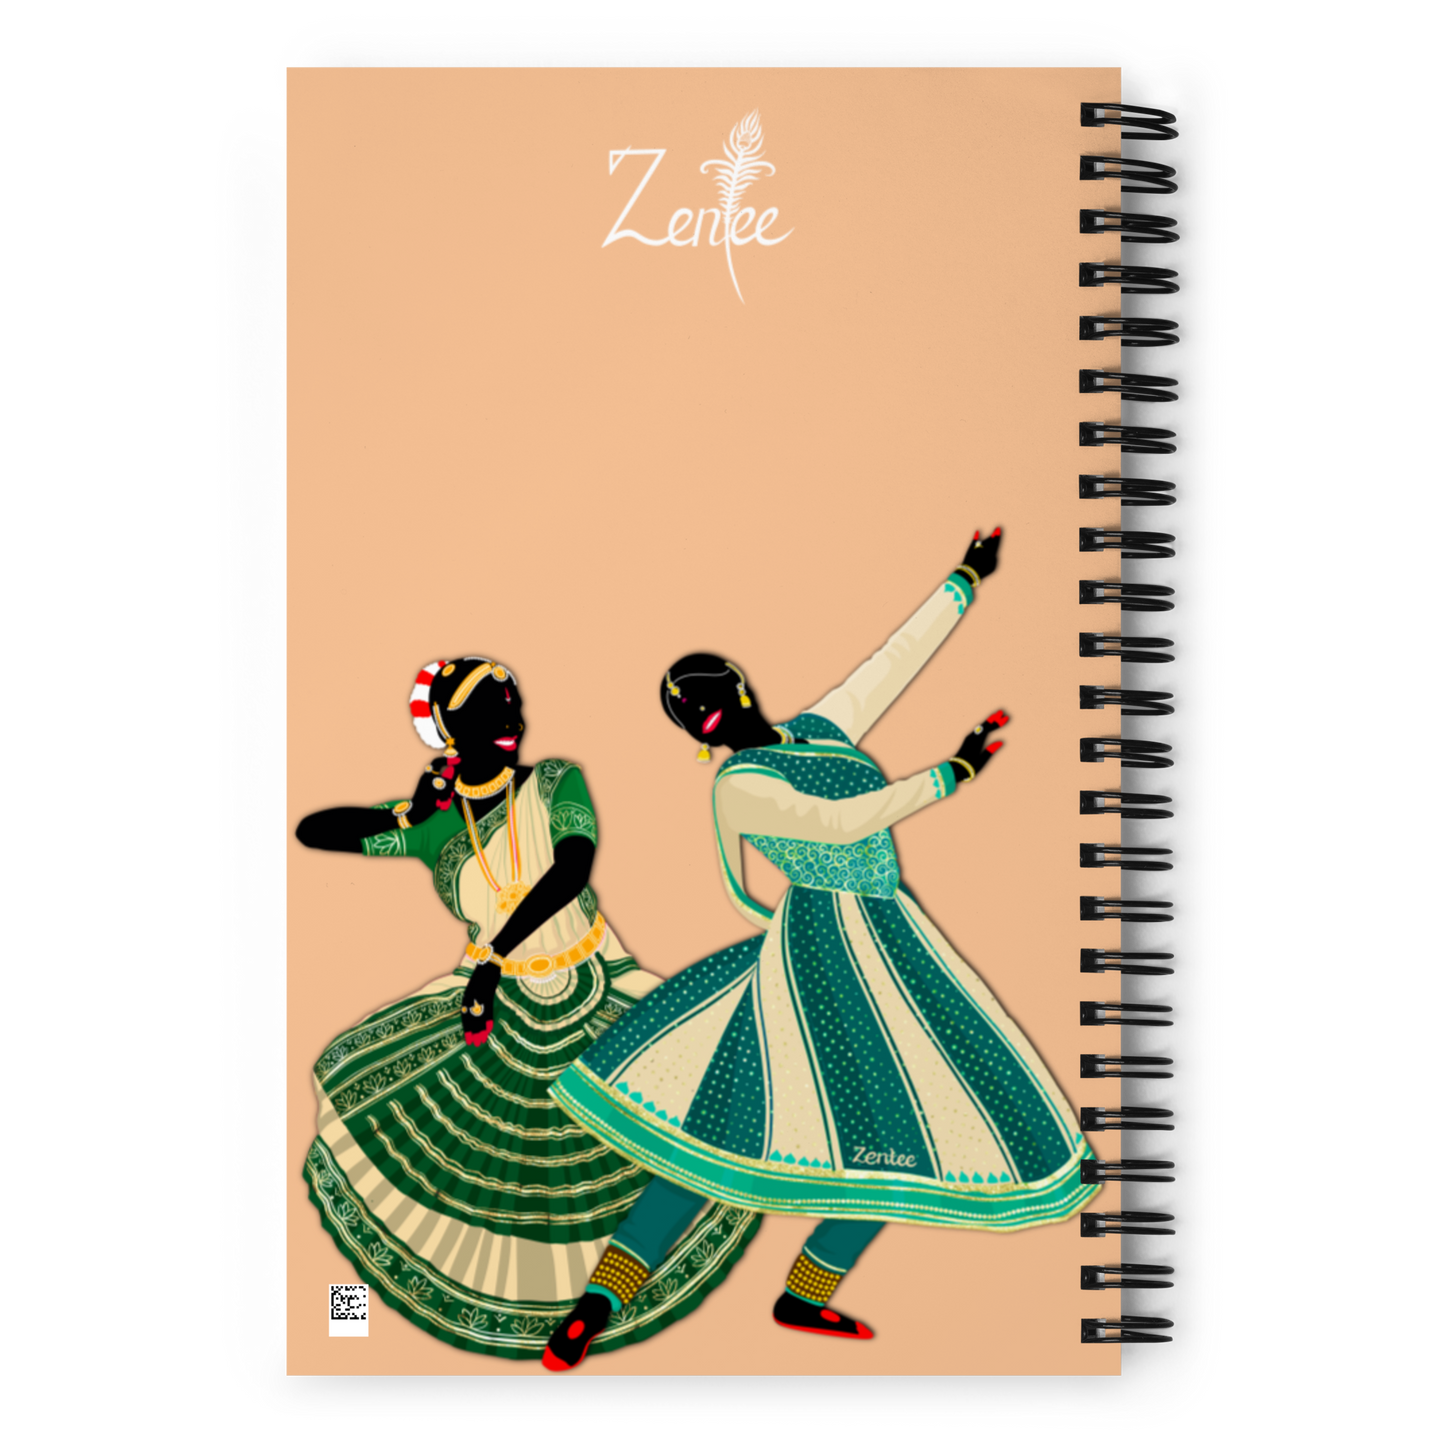 Dancers - Spiral notebook